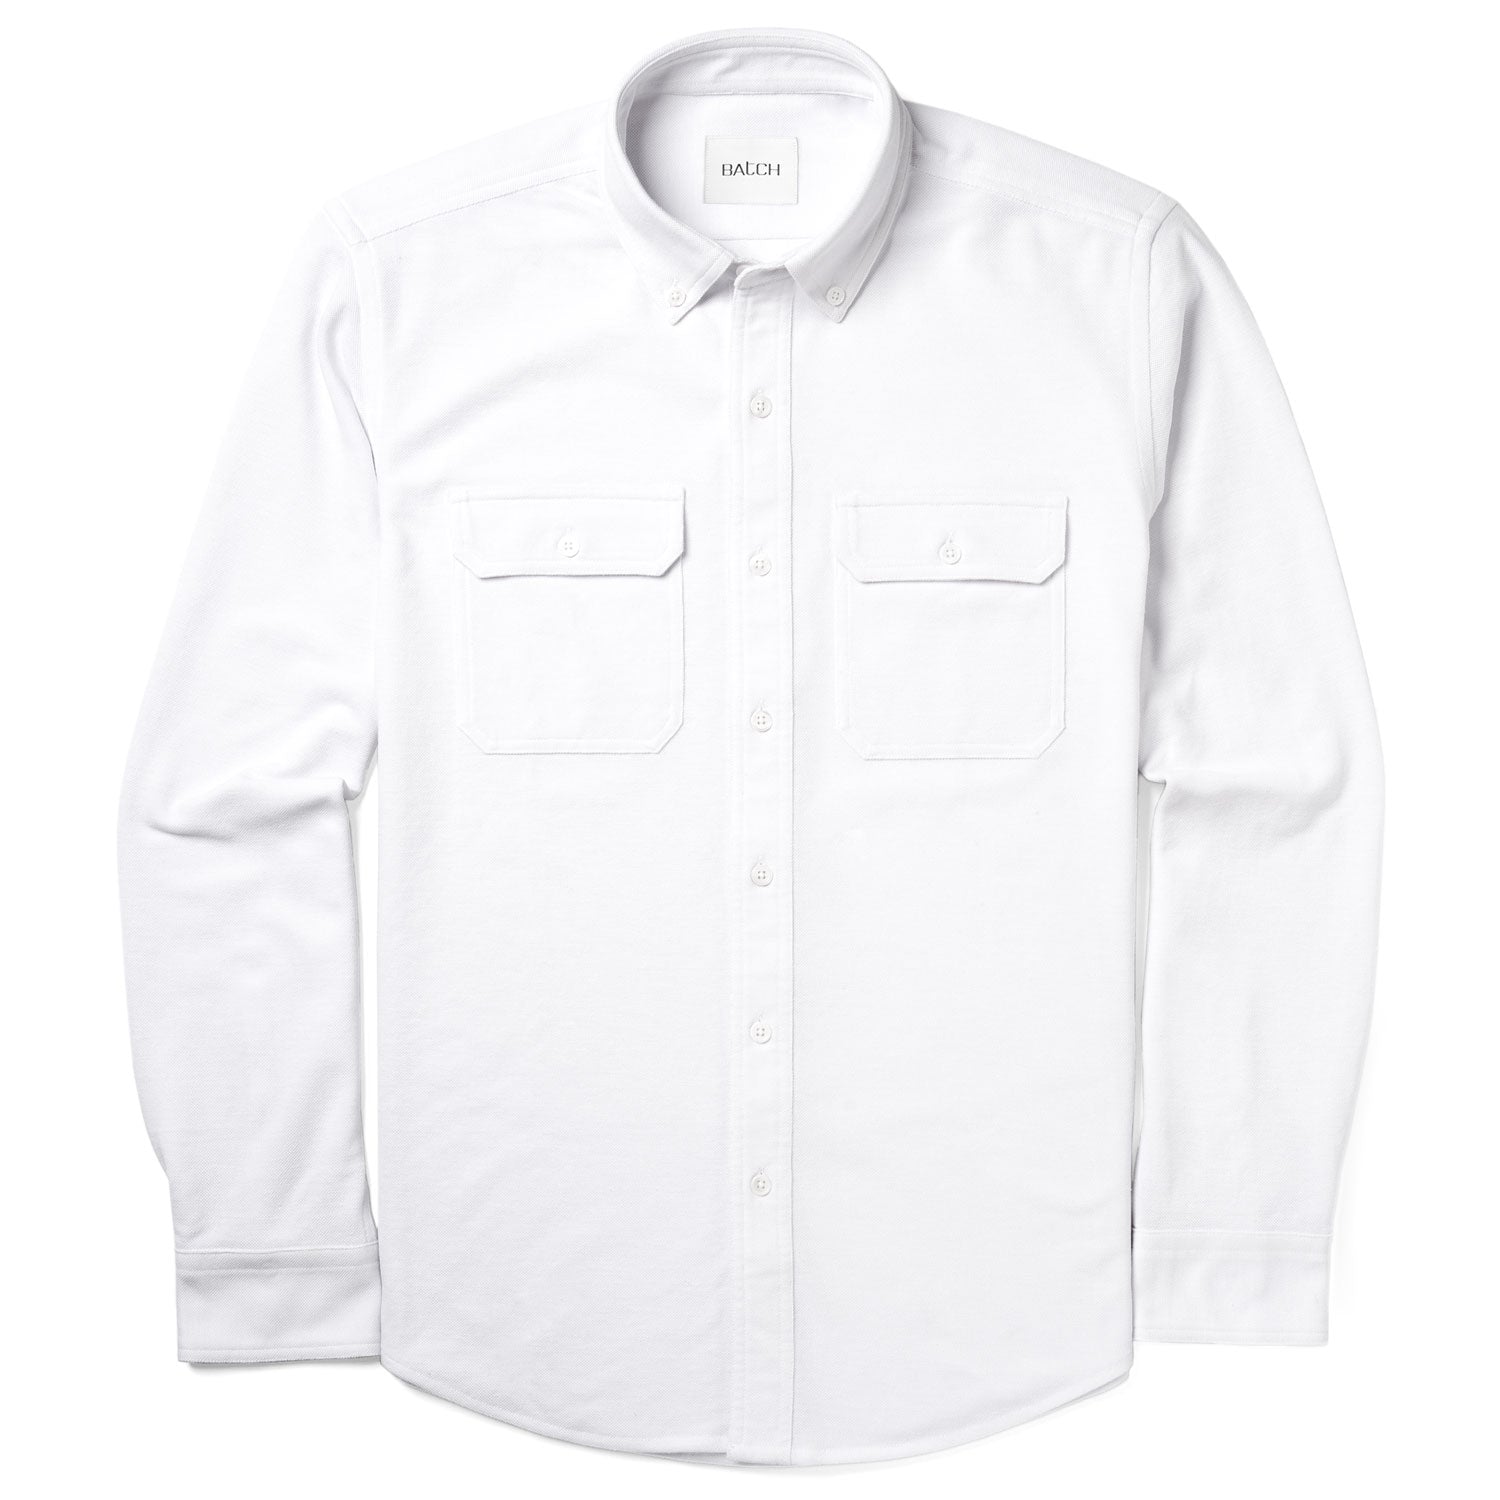 Constructor Knit Utility Shirt – White Cotton Poly Pique